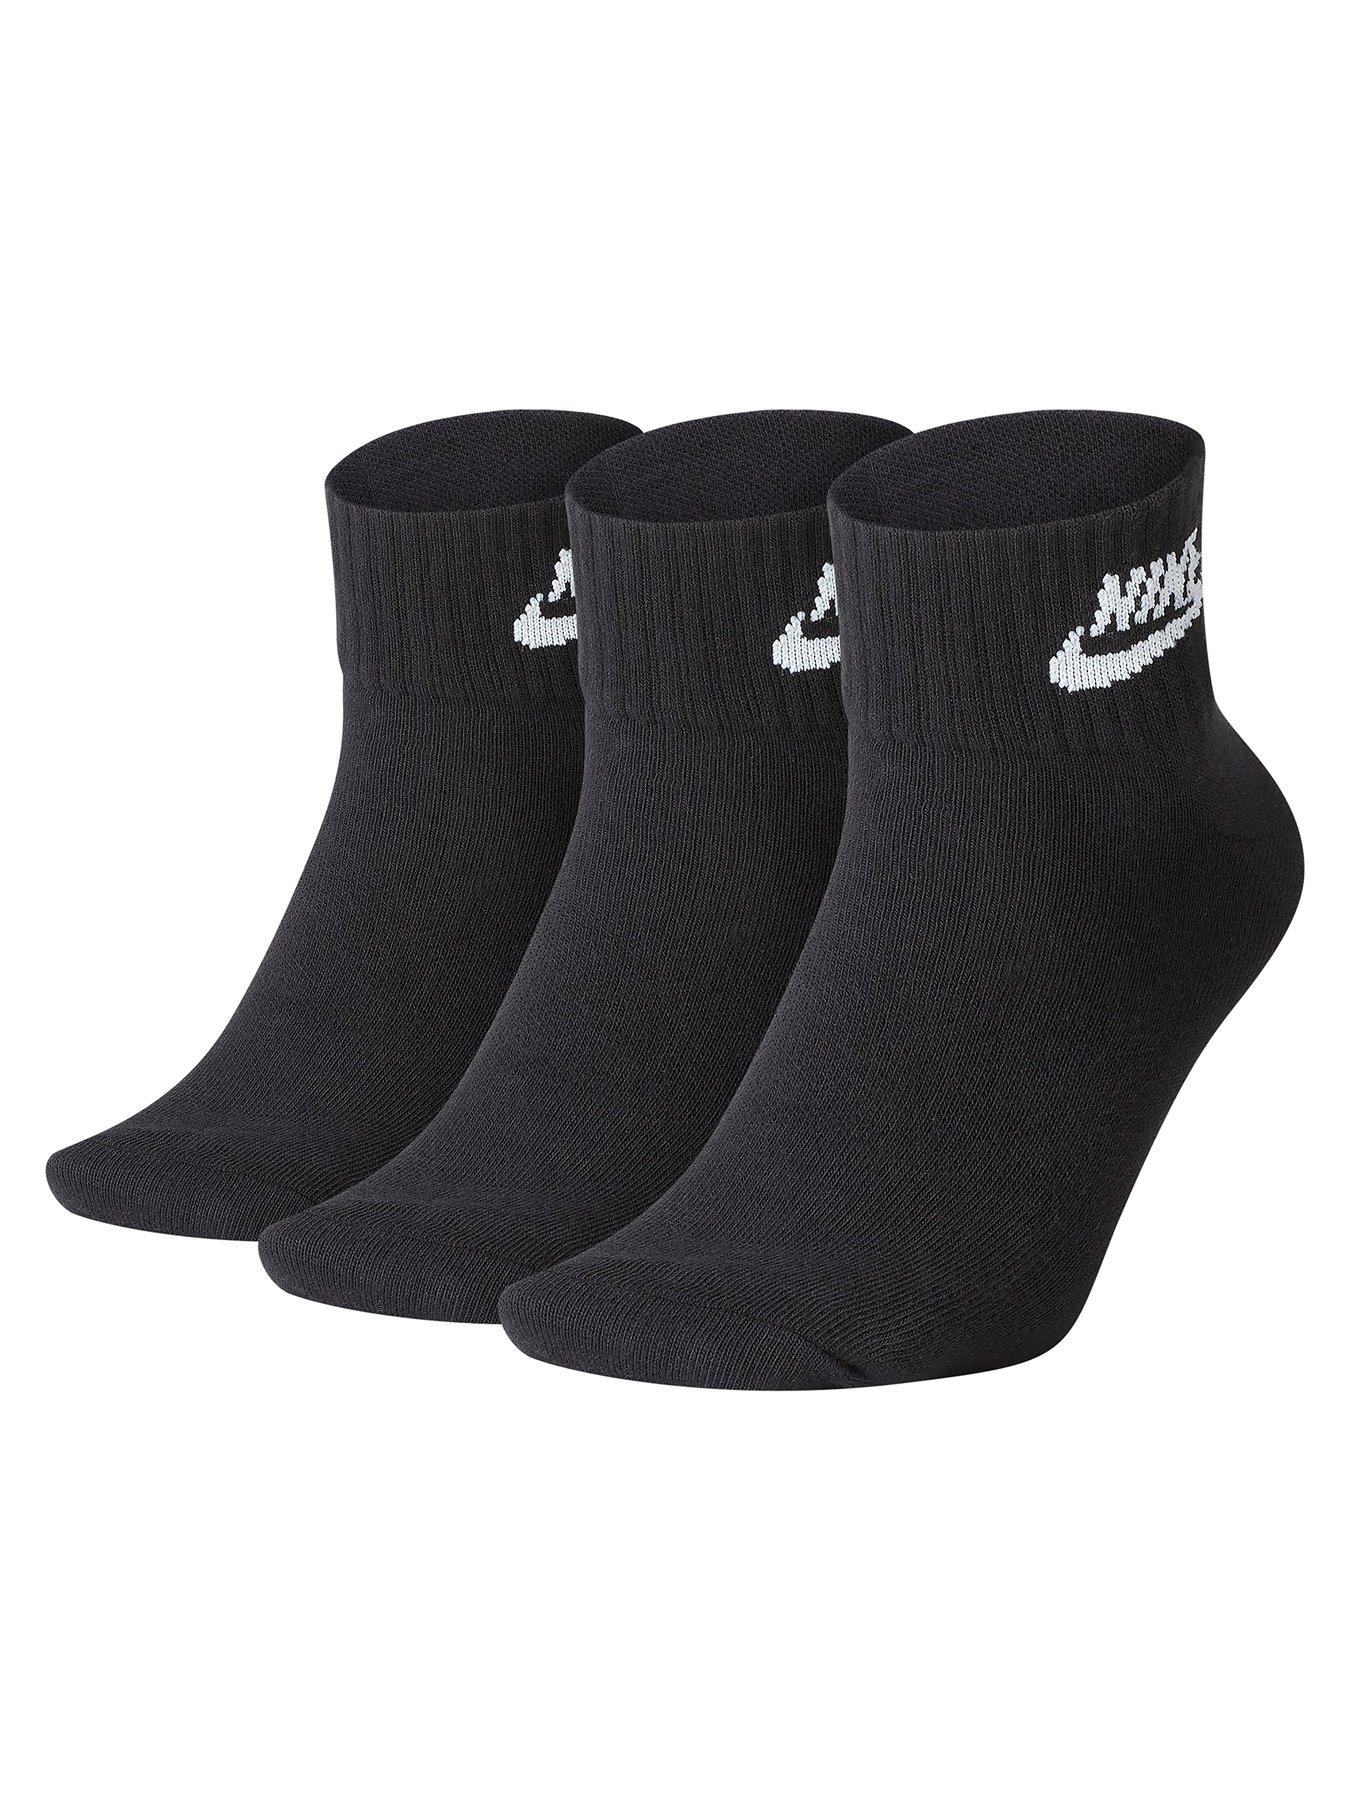 black nike socks ankle